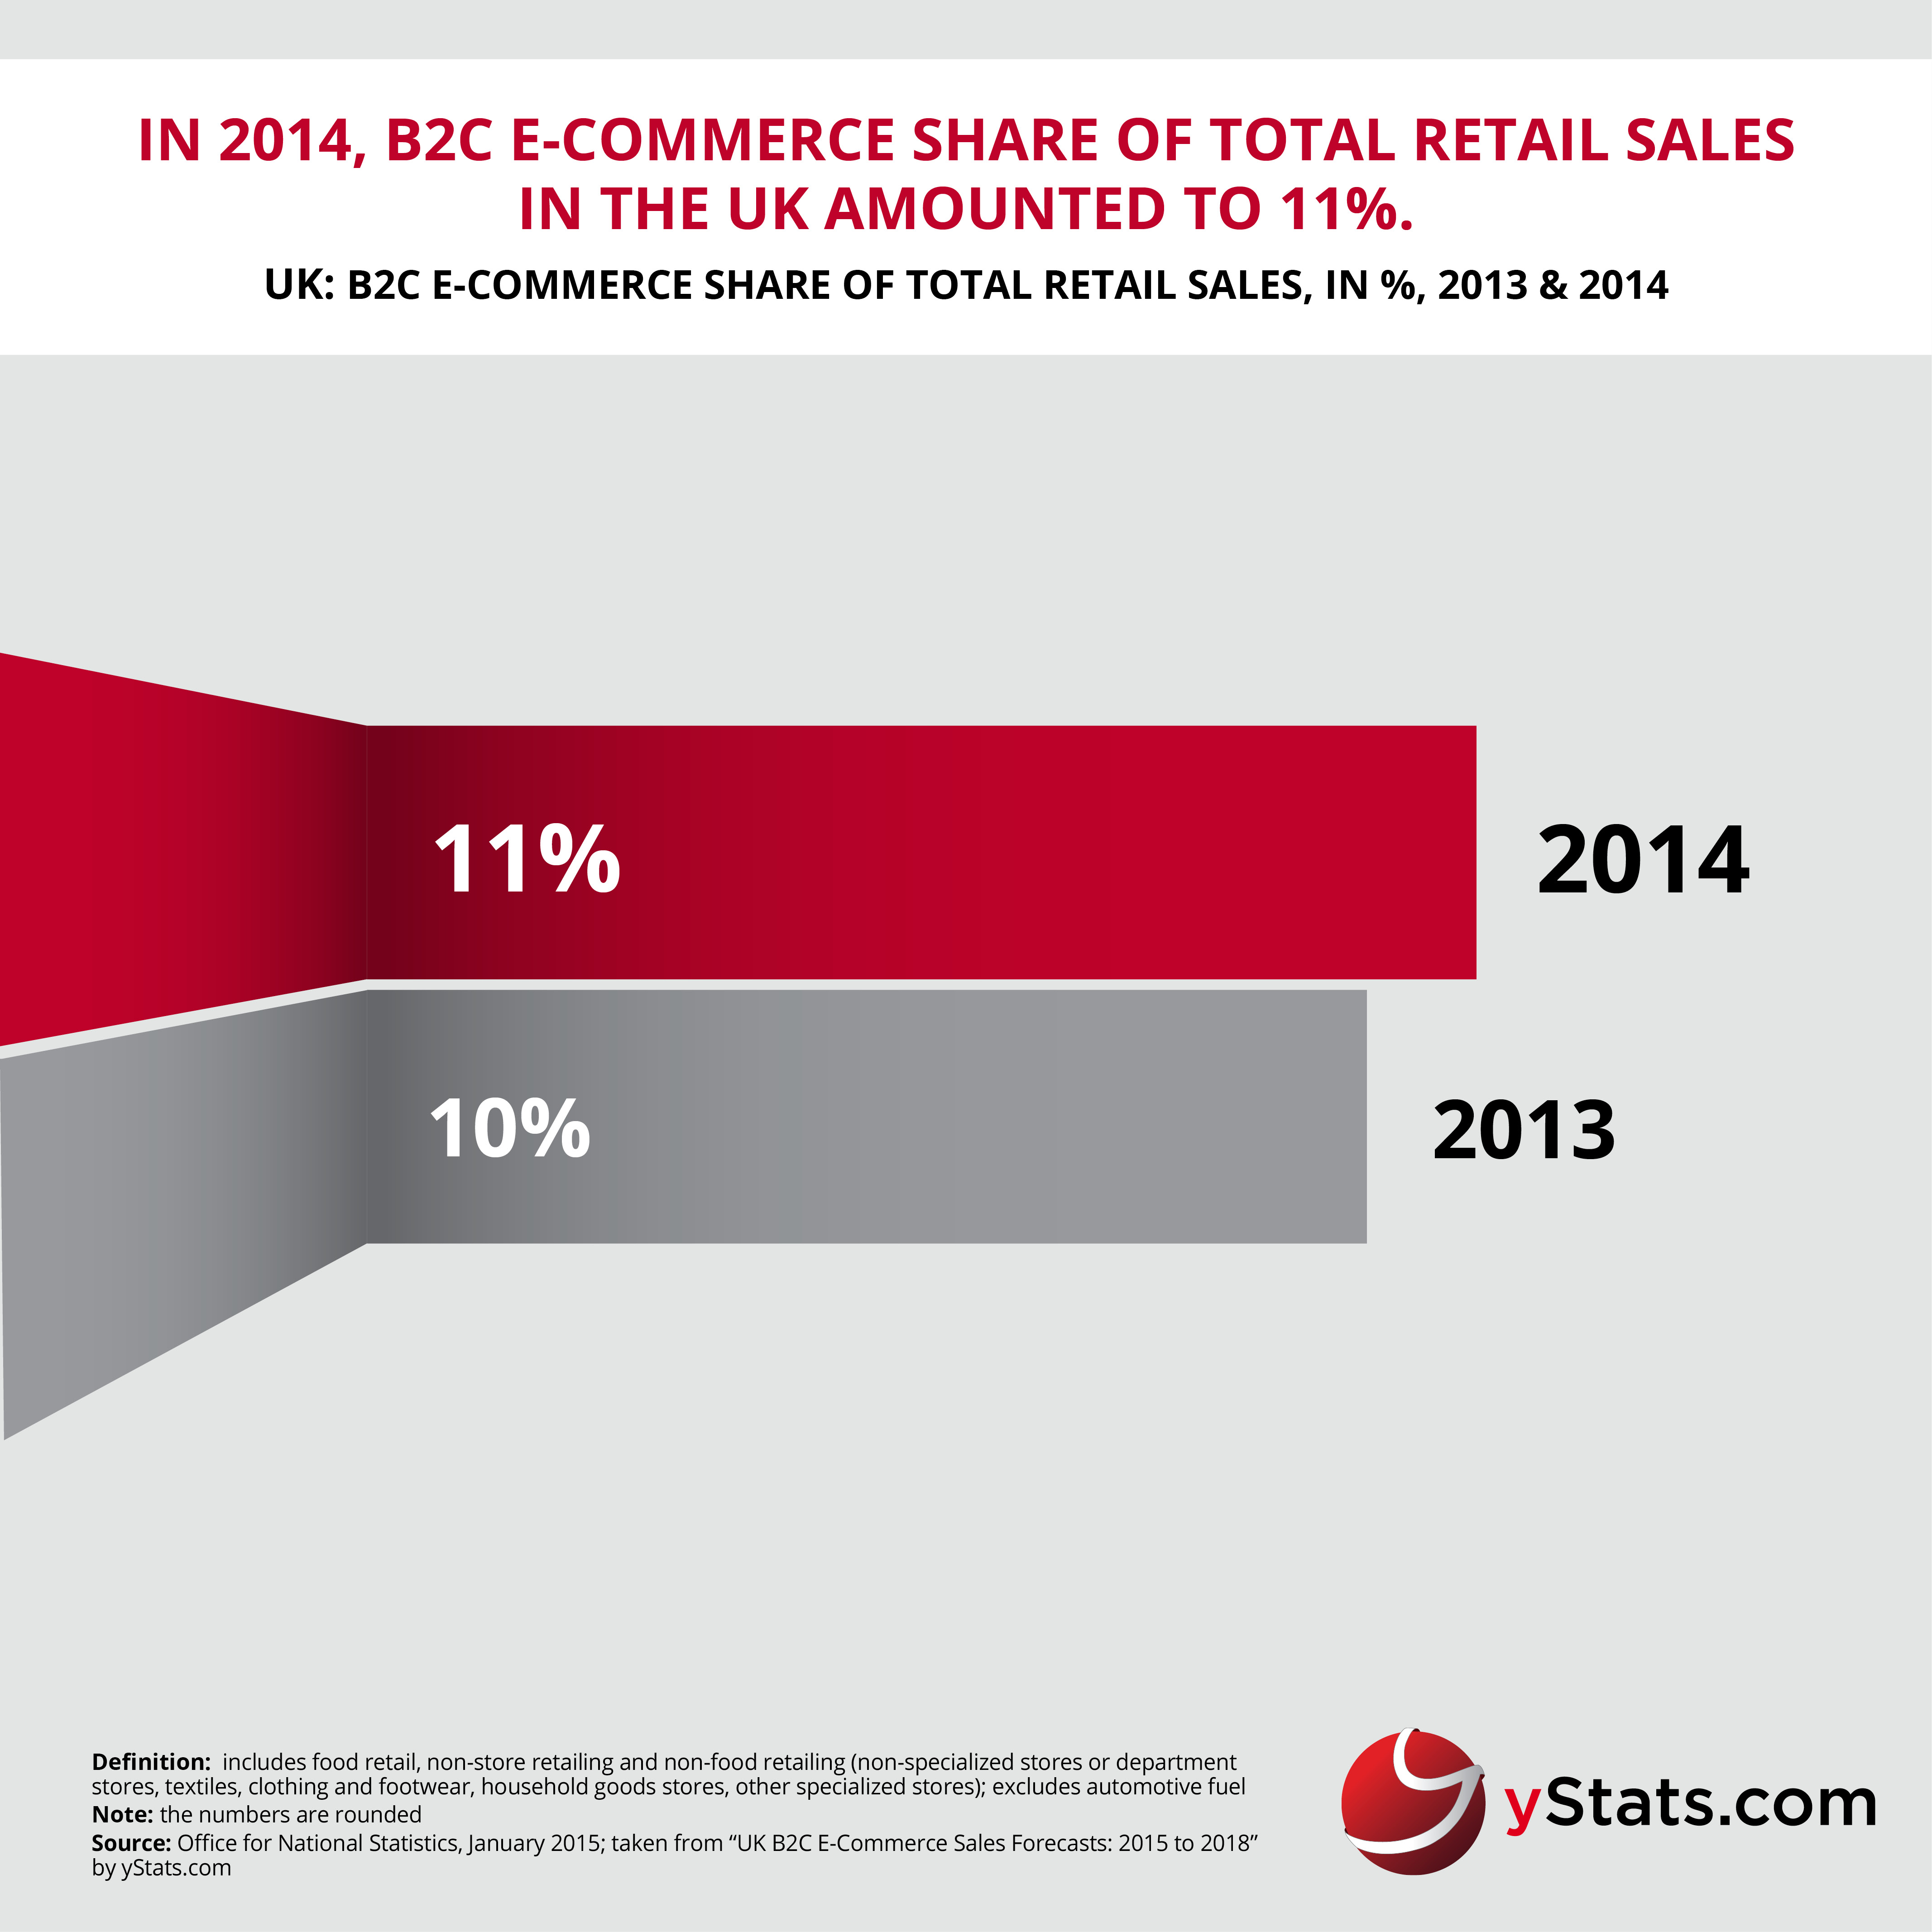 yStats.com Infographic UK B2C E-Commerce Sales Forecasts 2015 to 2018